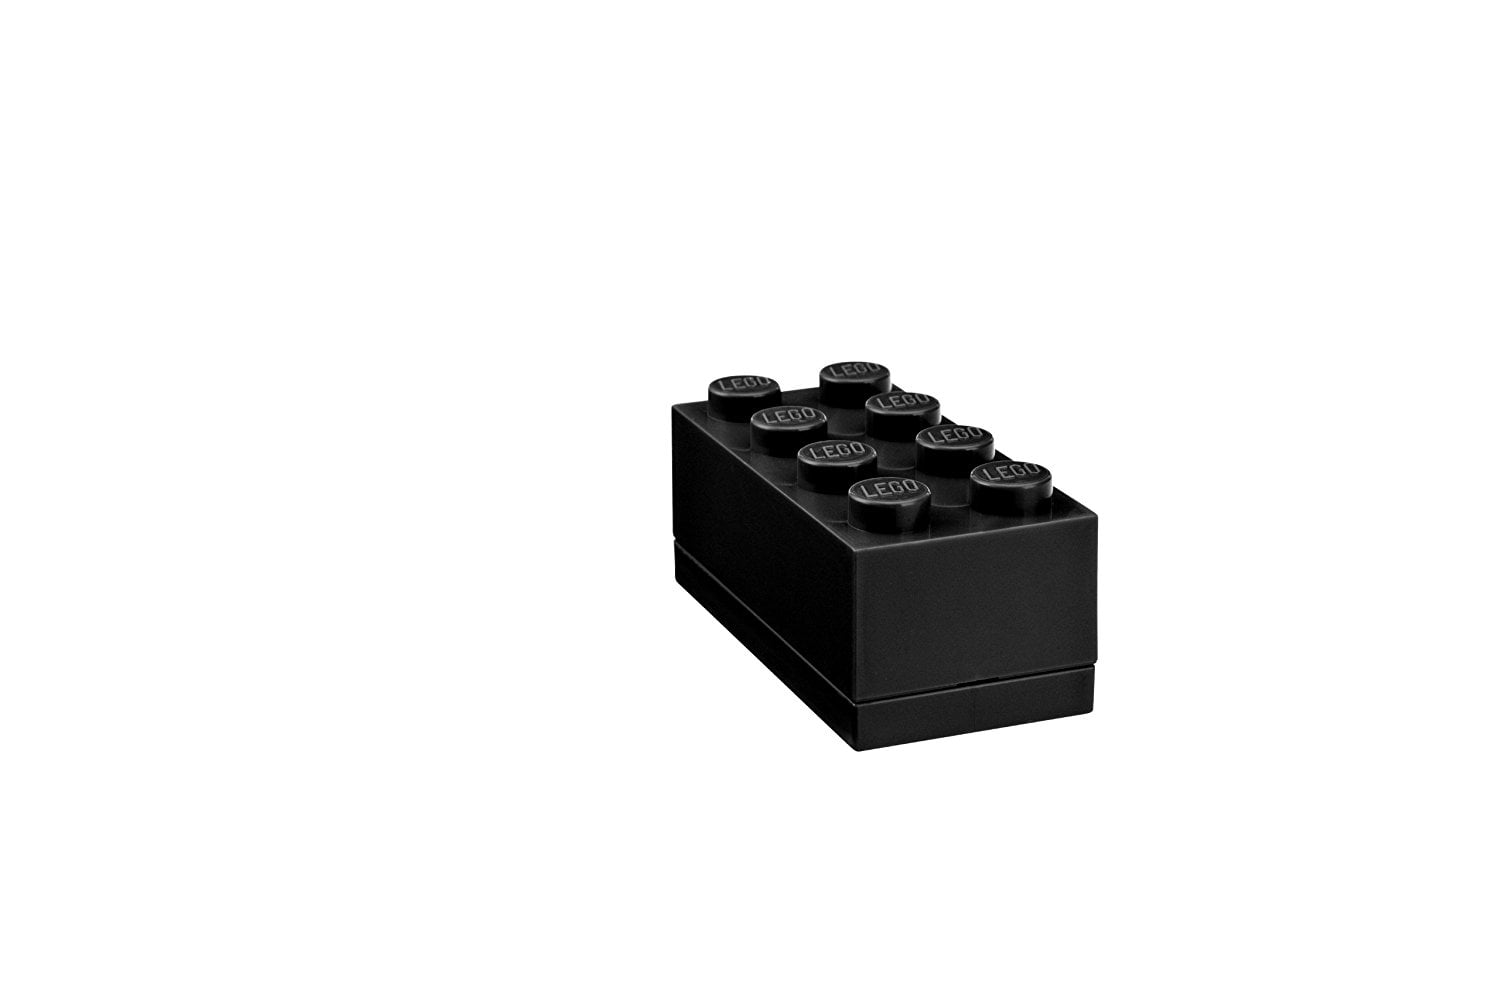 LEGO LUNCH/STORAGE MINI BOX 8 FOR SNACKS 4 COLOURS